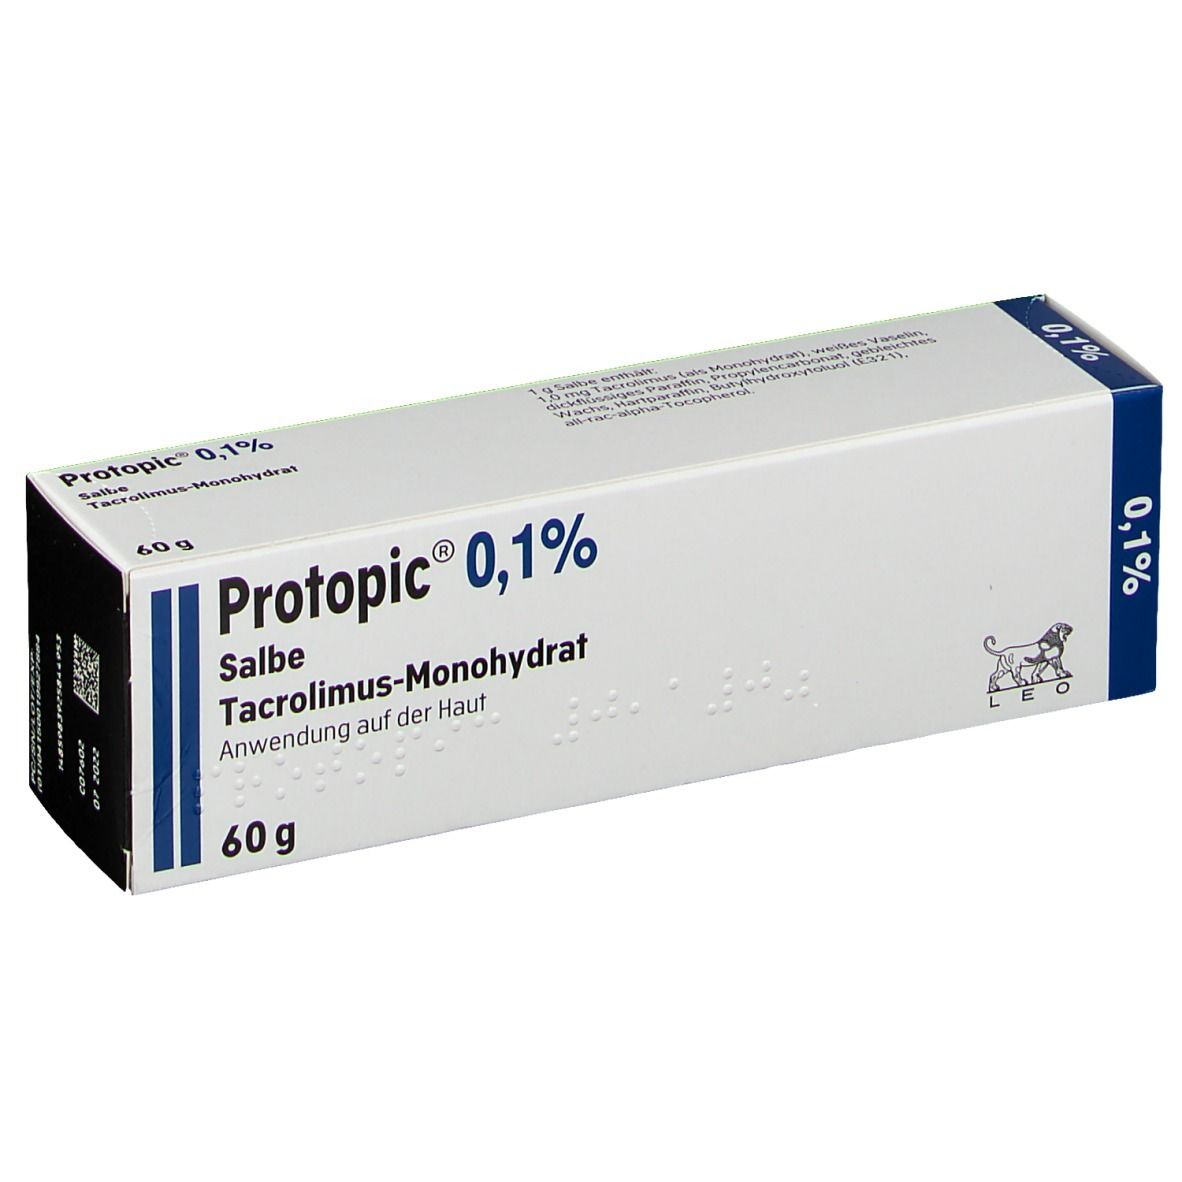 Protopic® 0,1% Salbe 60 g mit dem E-Rezept kaufen - SHOP APOTHEKE